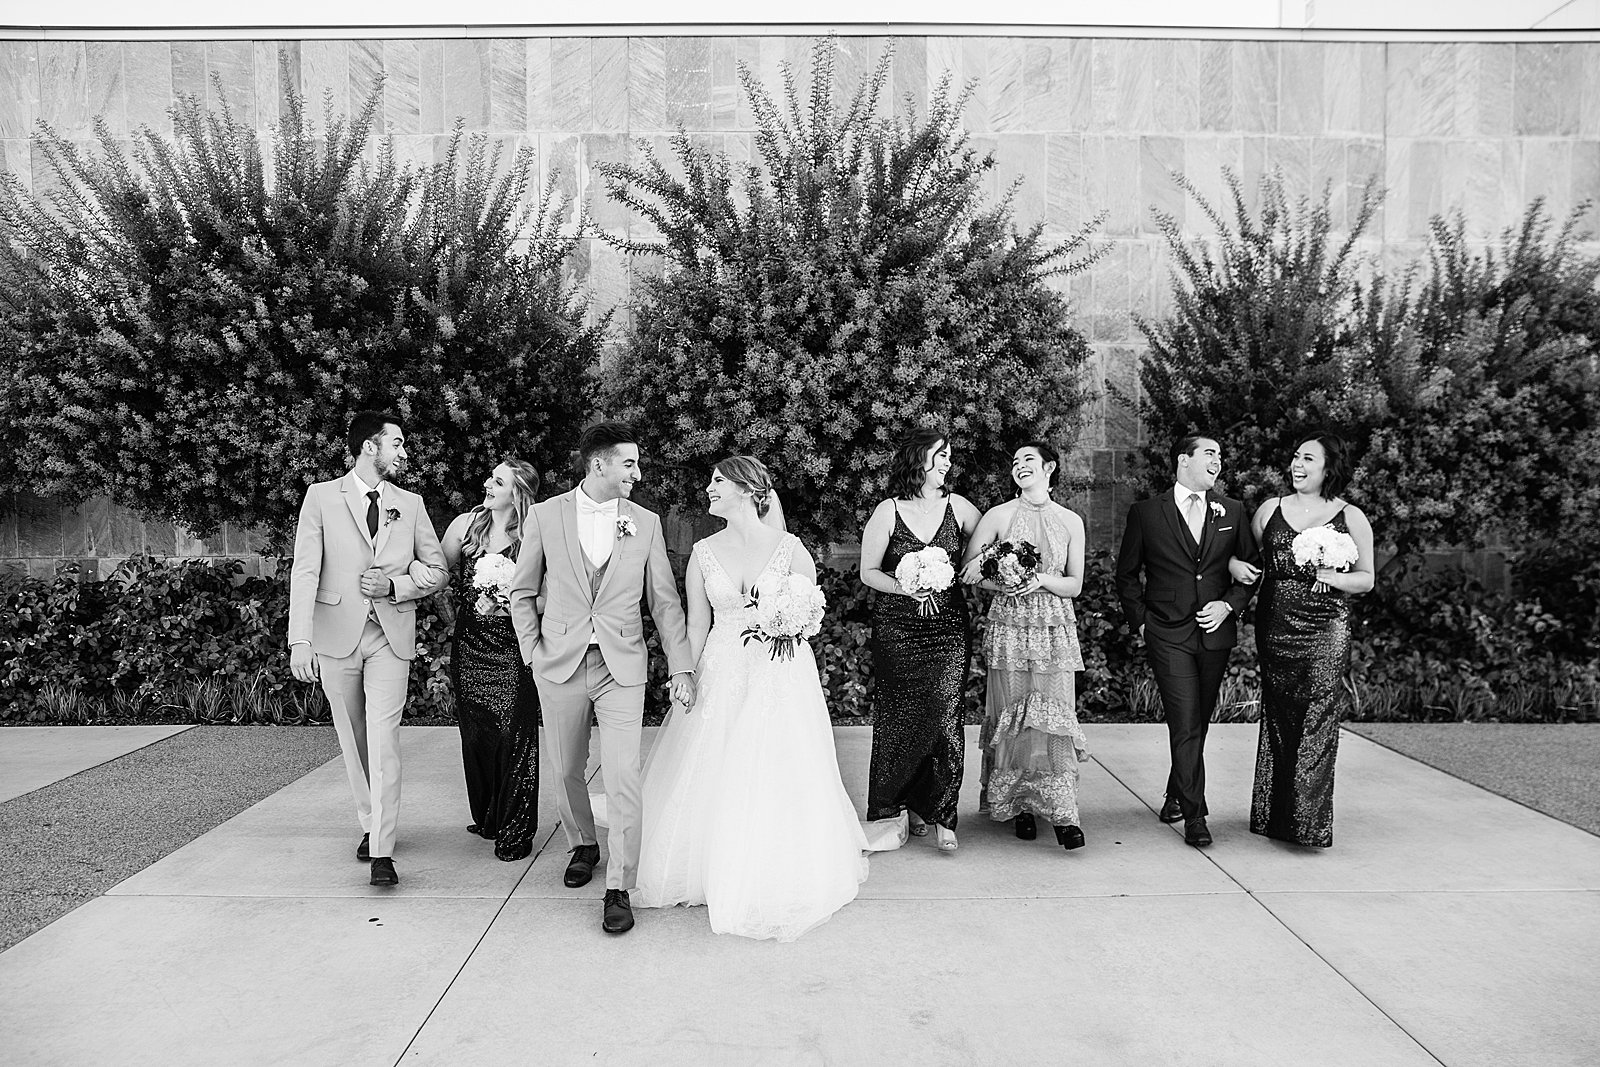 Mixed gender party having fun together at SoHo63 weding by Arizona wedding photographer PMA Photography.